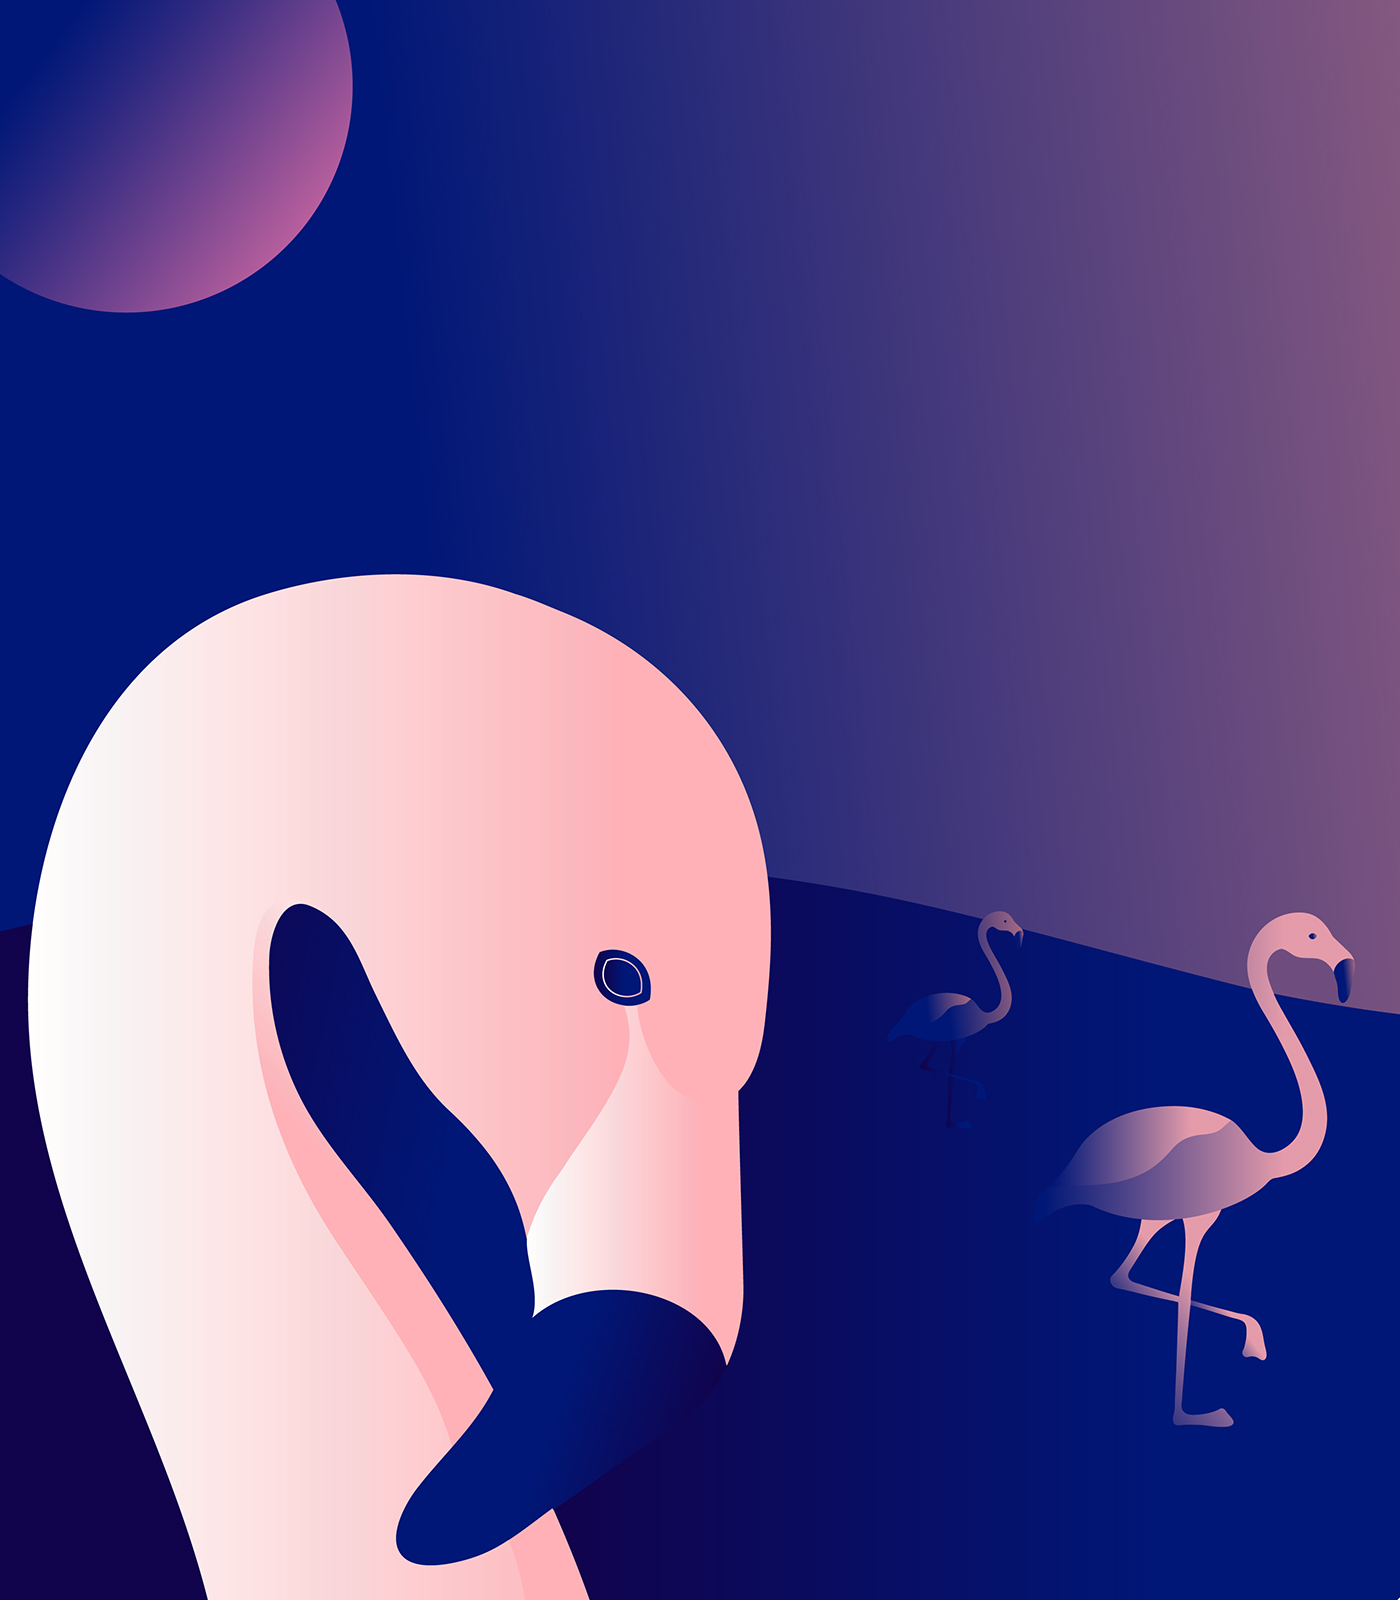 ILLUSTRATION  vector Vectorial flamingo blue pink strasbourg france Illustrator wacom